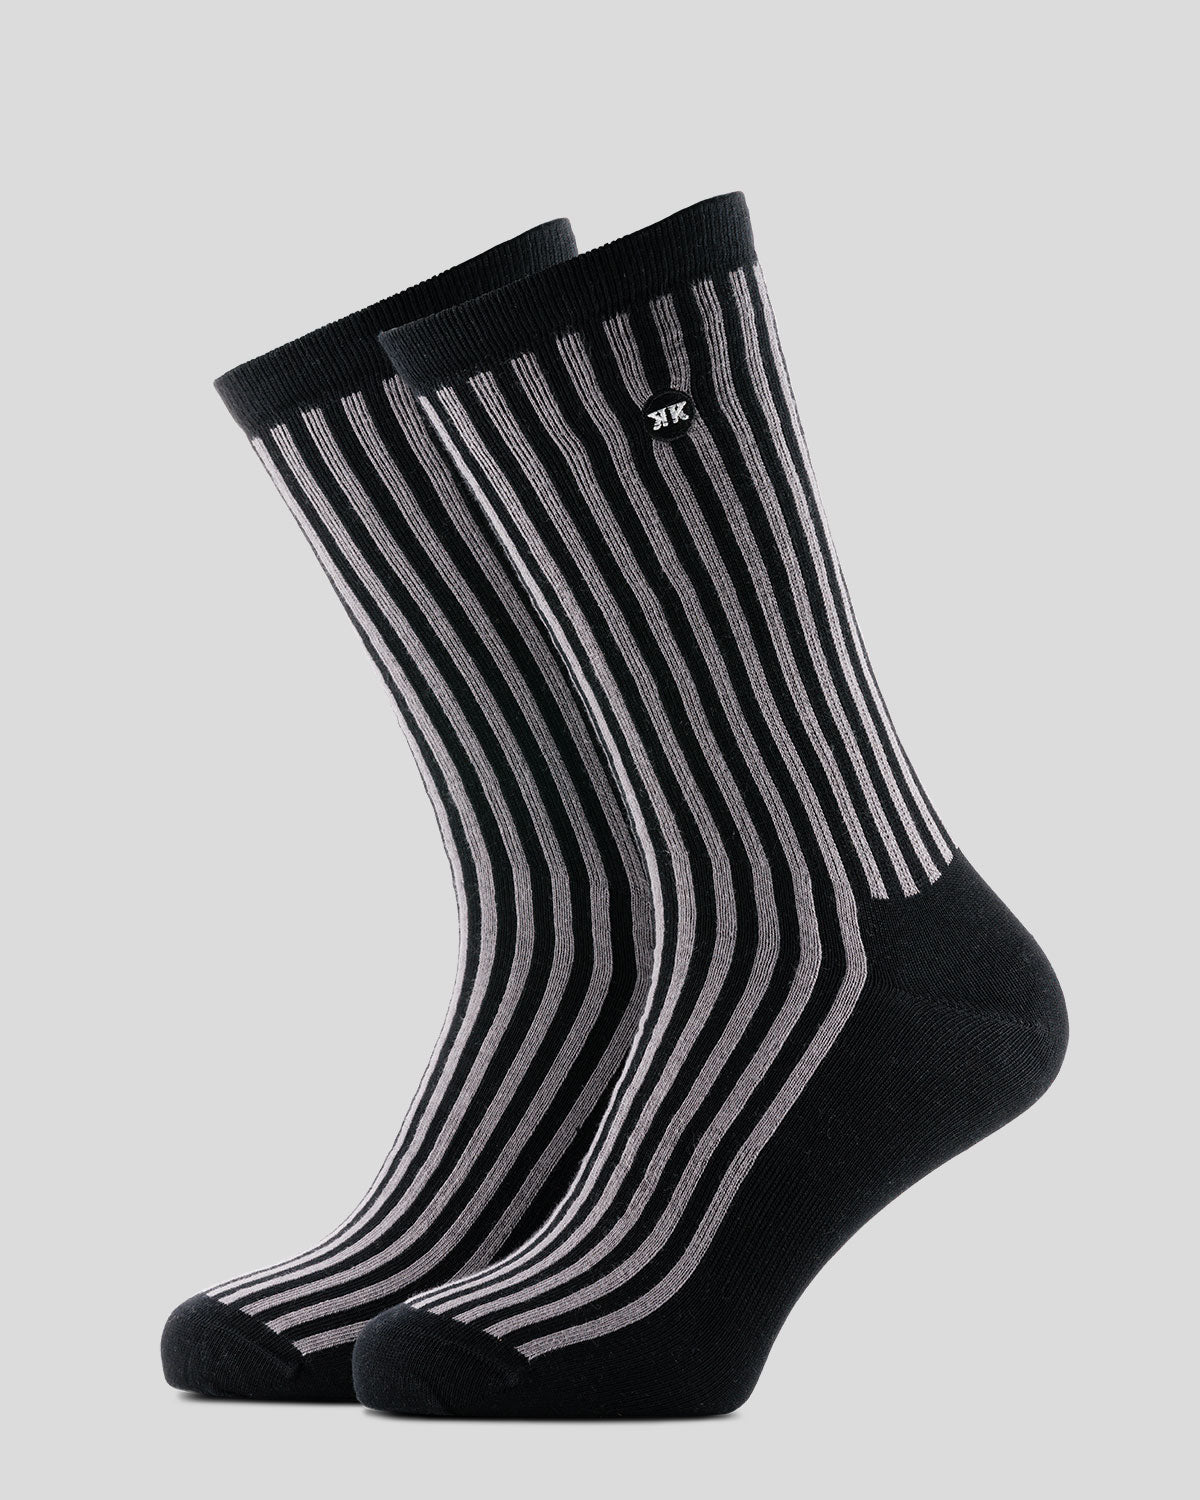 Long Stripes LT Grey/Black